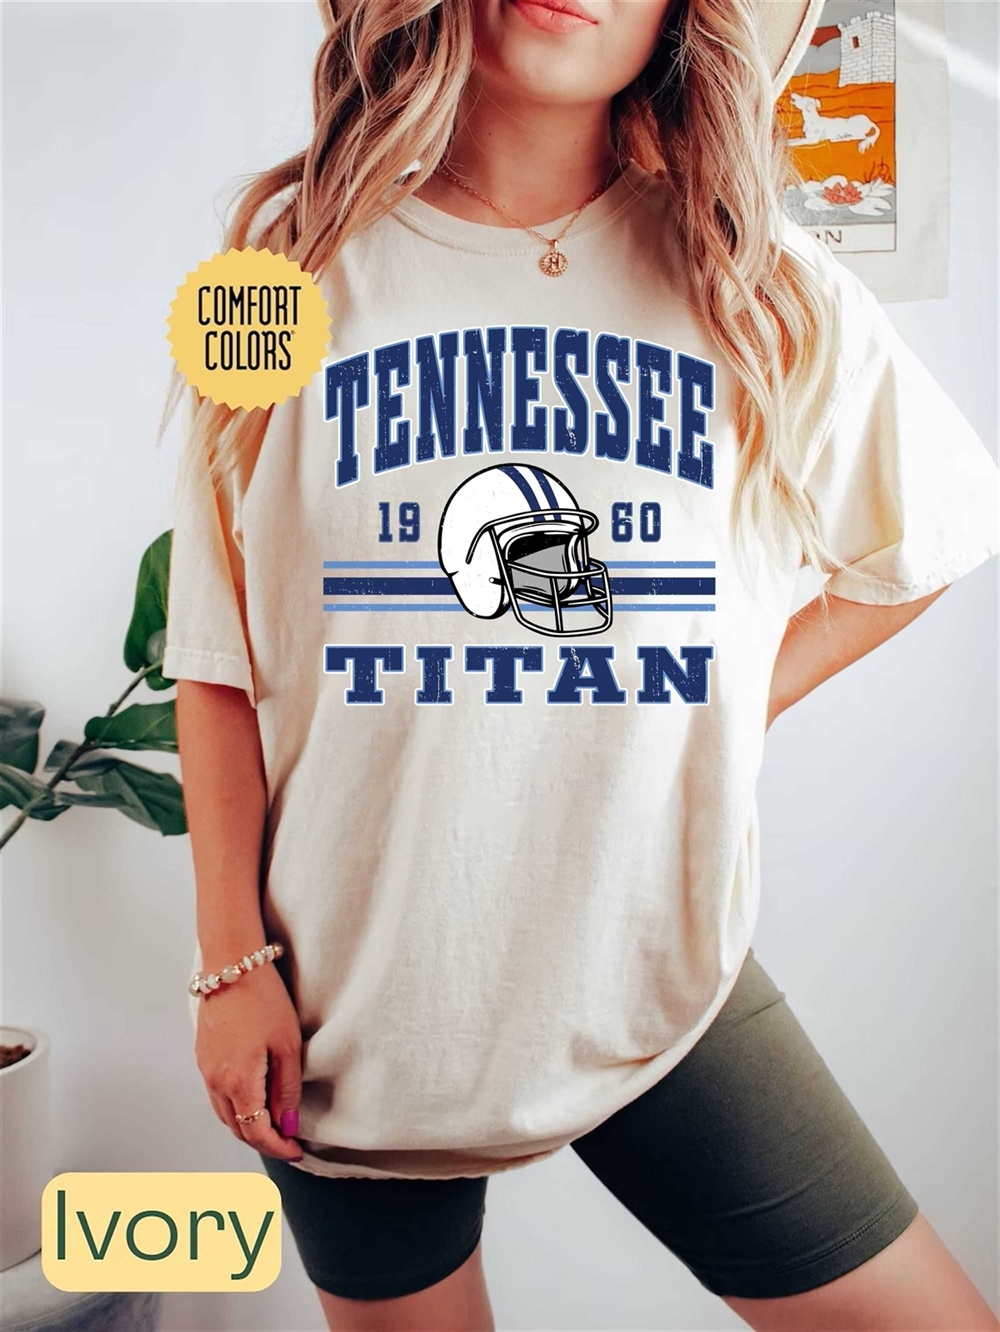 Tennessee Football Comfort Colors Shirt Trendy Vintage Retro 80s Style Football Tshirt